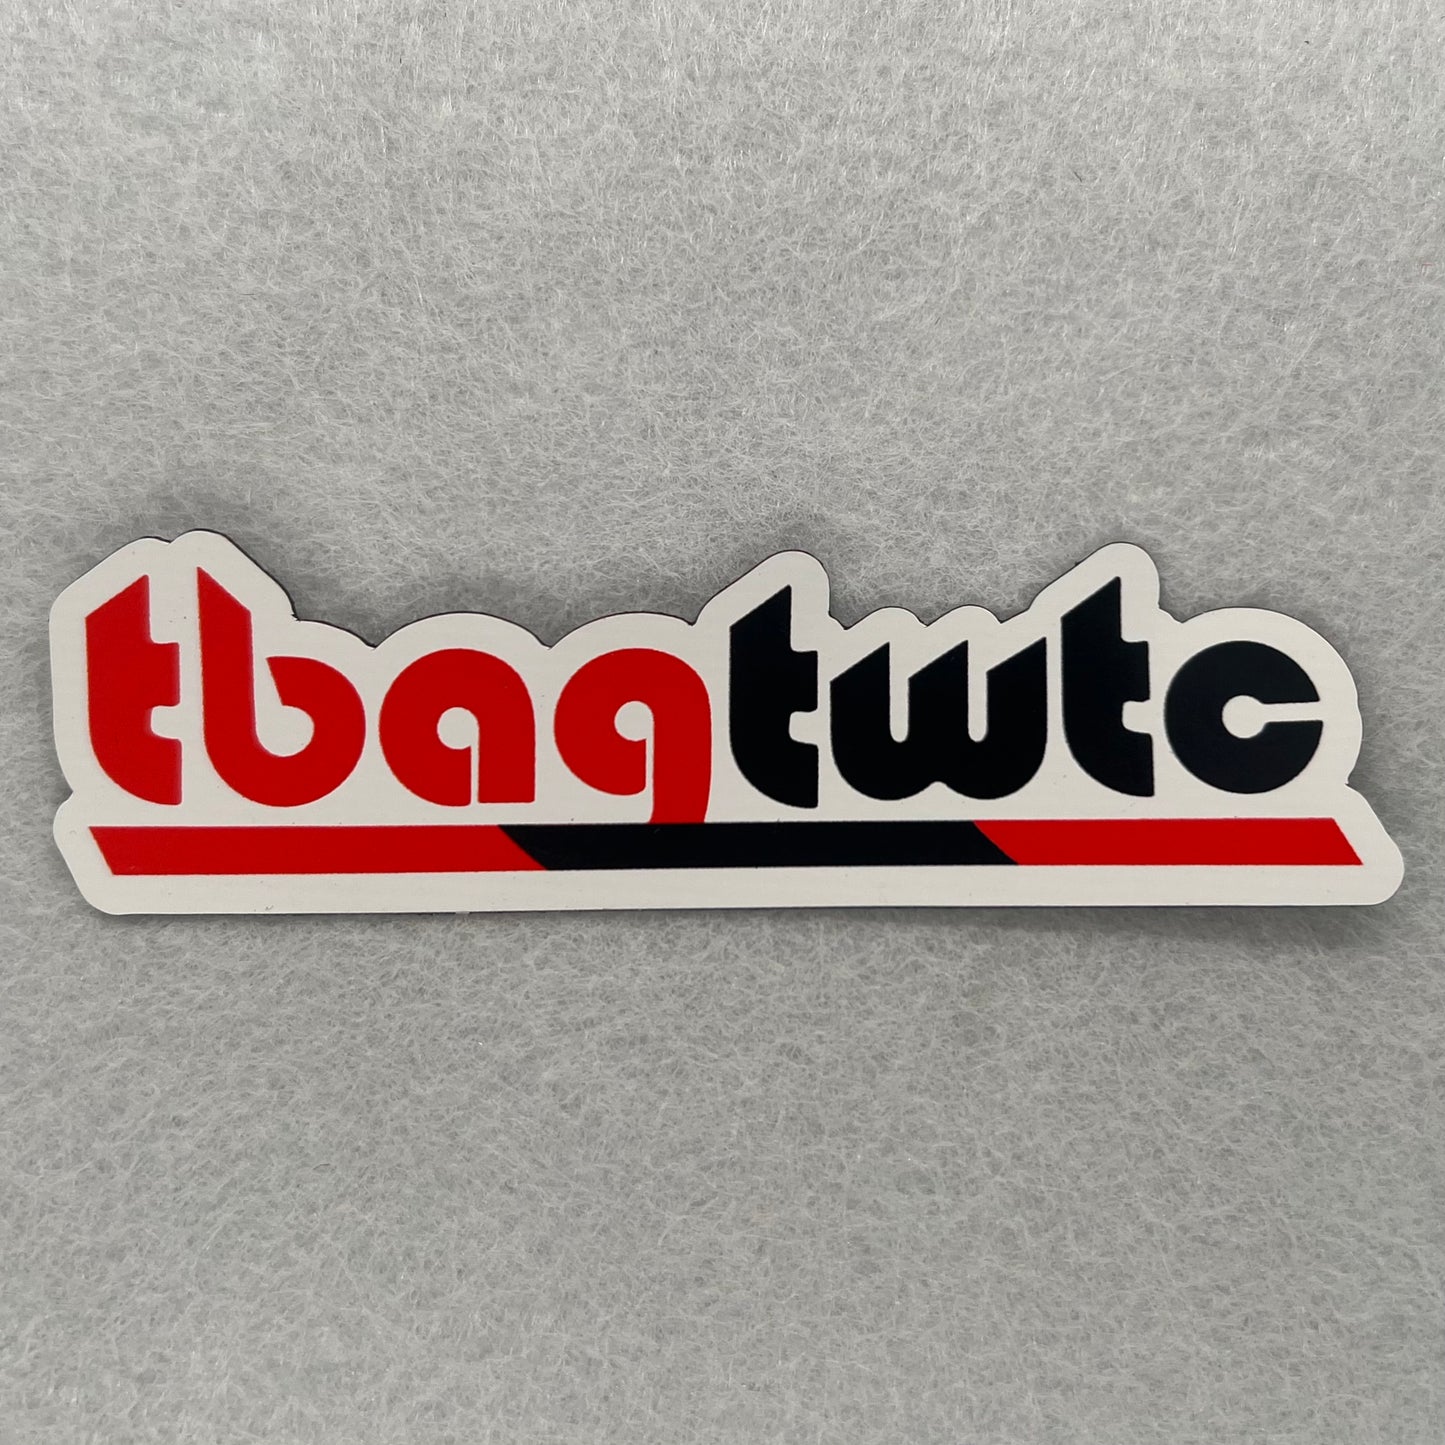 TBAGTWTC Magnet